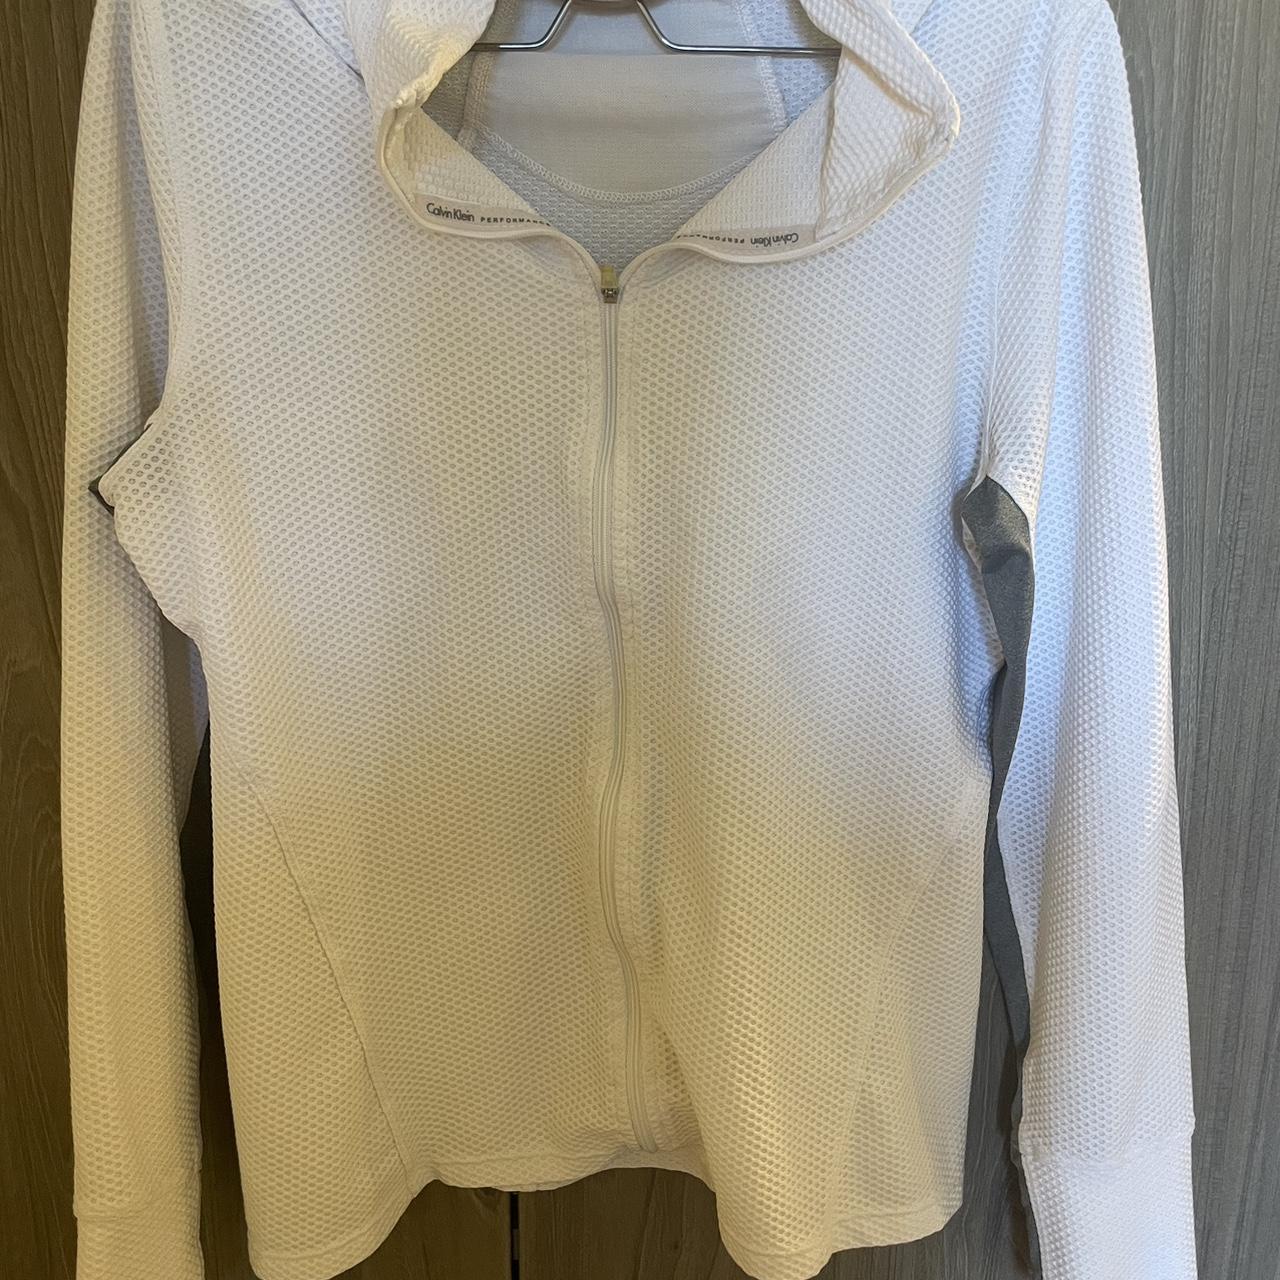 Calvin Klein Sportswear Women's White and Grey Jacket